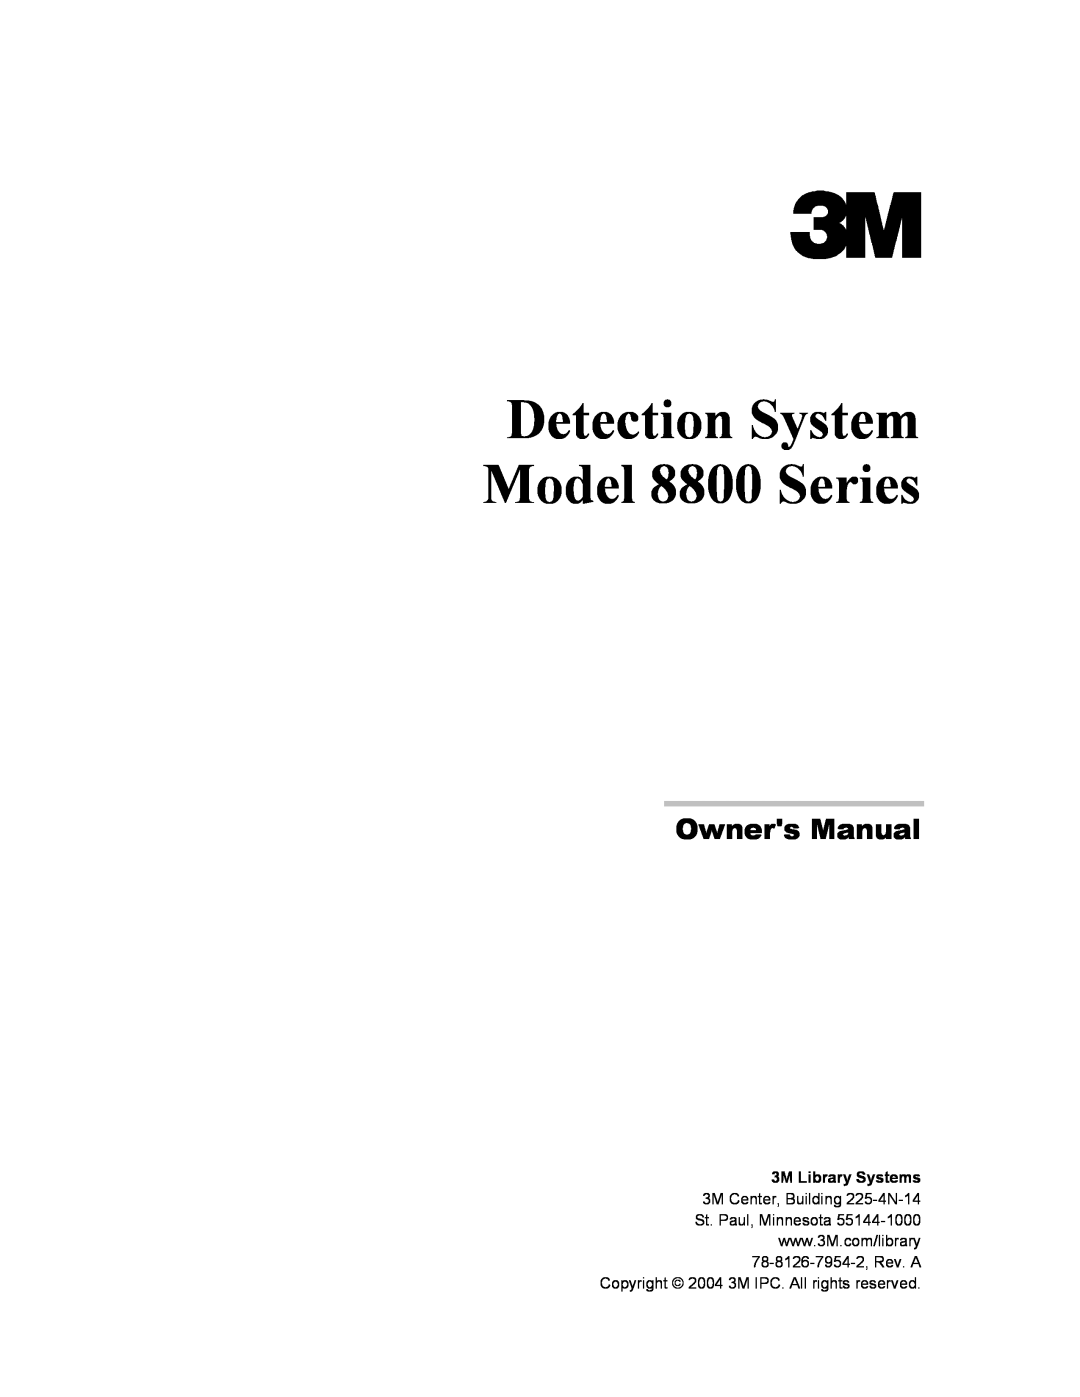 3M owner manual Detection System Model 8800 Series, 3M Center, Building 225-4N-14 